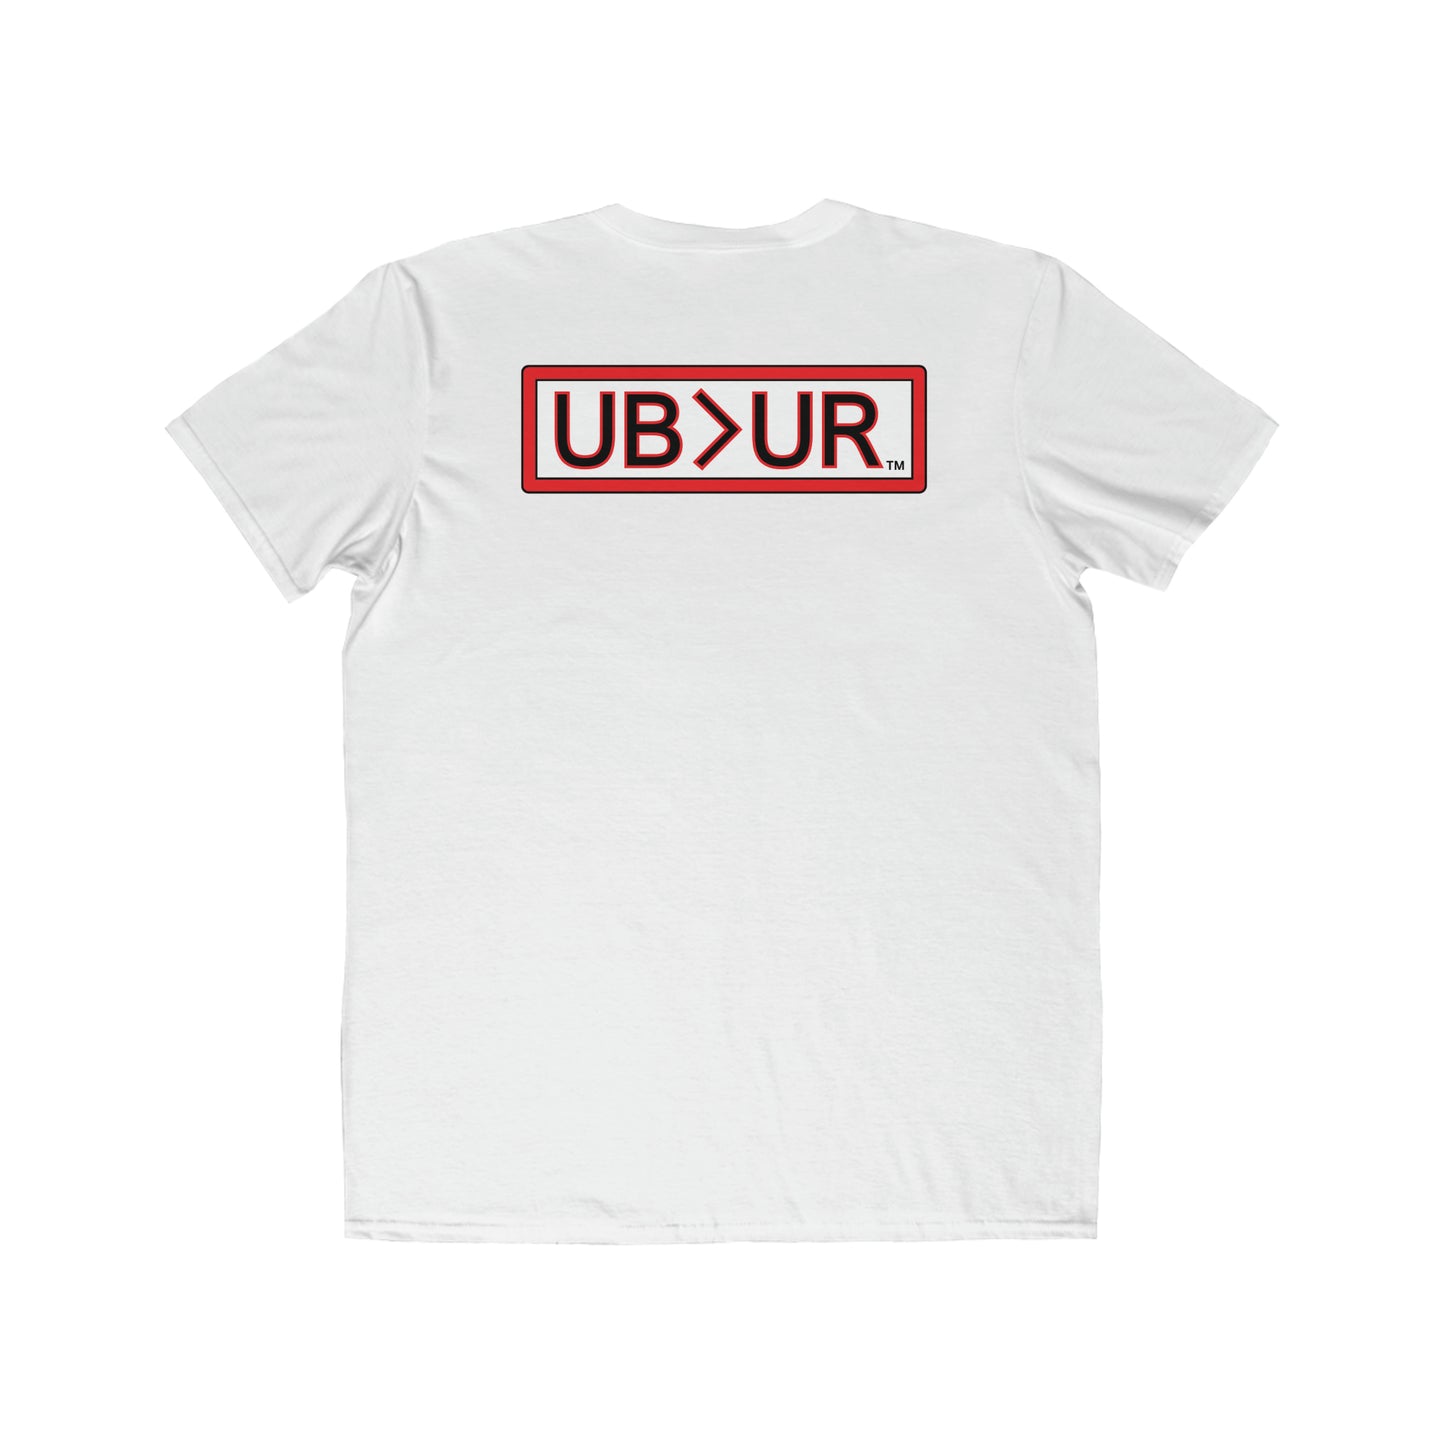 Men's Evolving T-shirt with UB>UR logo in the back